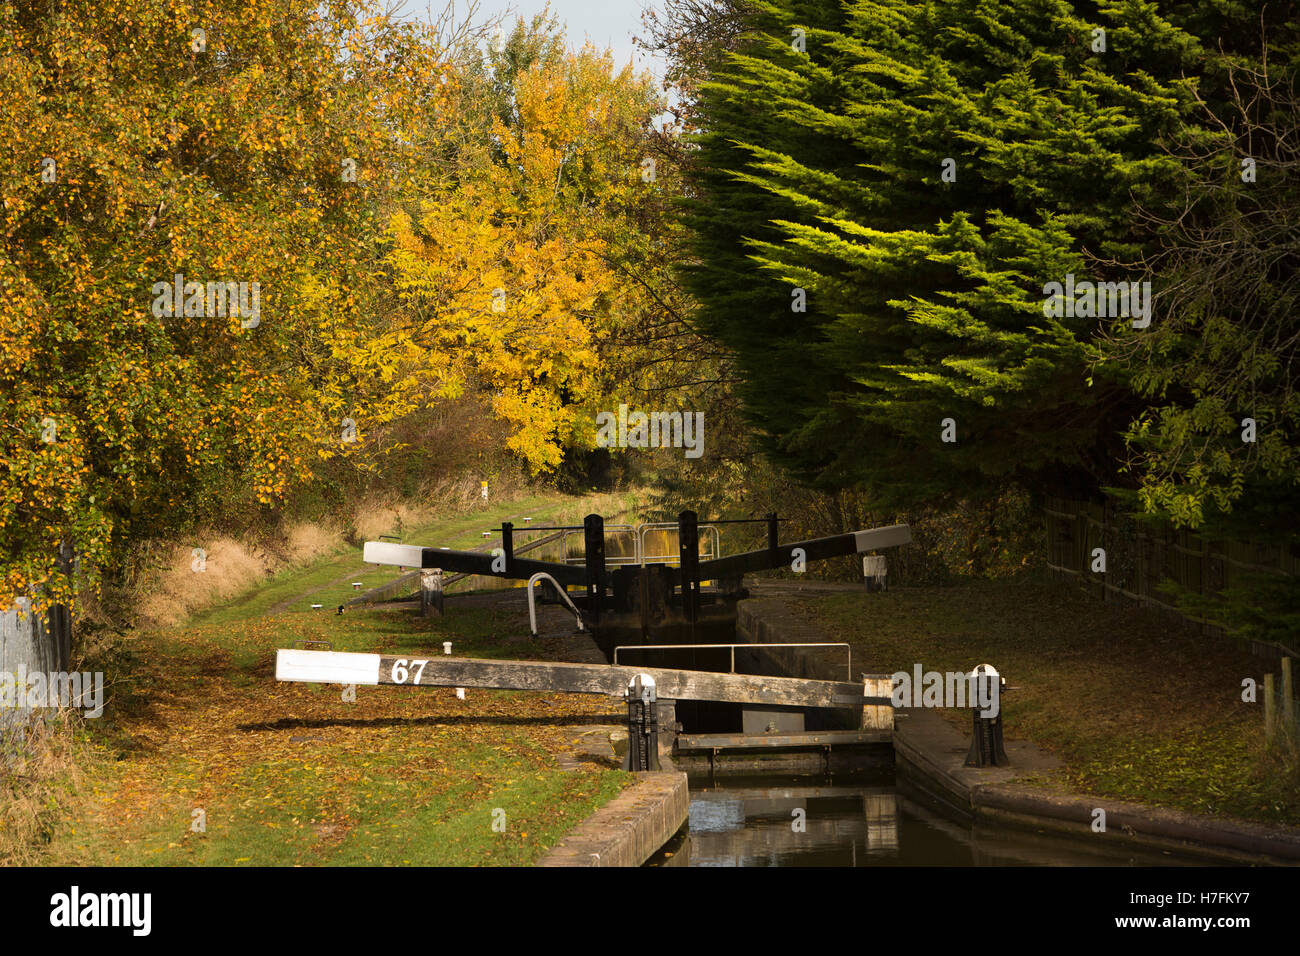 UK, England, Cheshire, Sandbach, Moston, Lock 67 on Trent and Mersey Canal, autumn Stock Photo